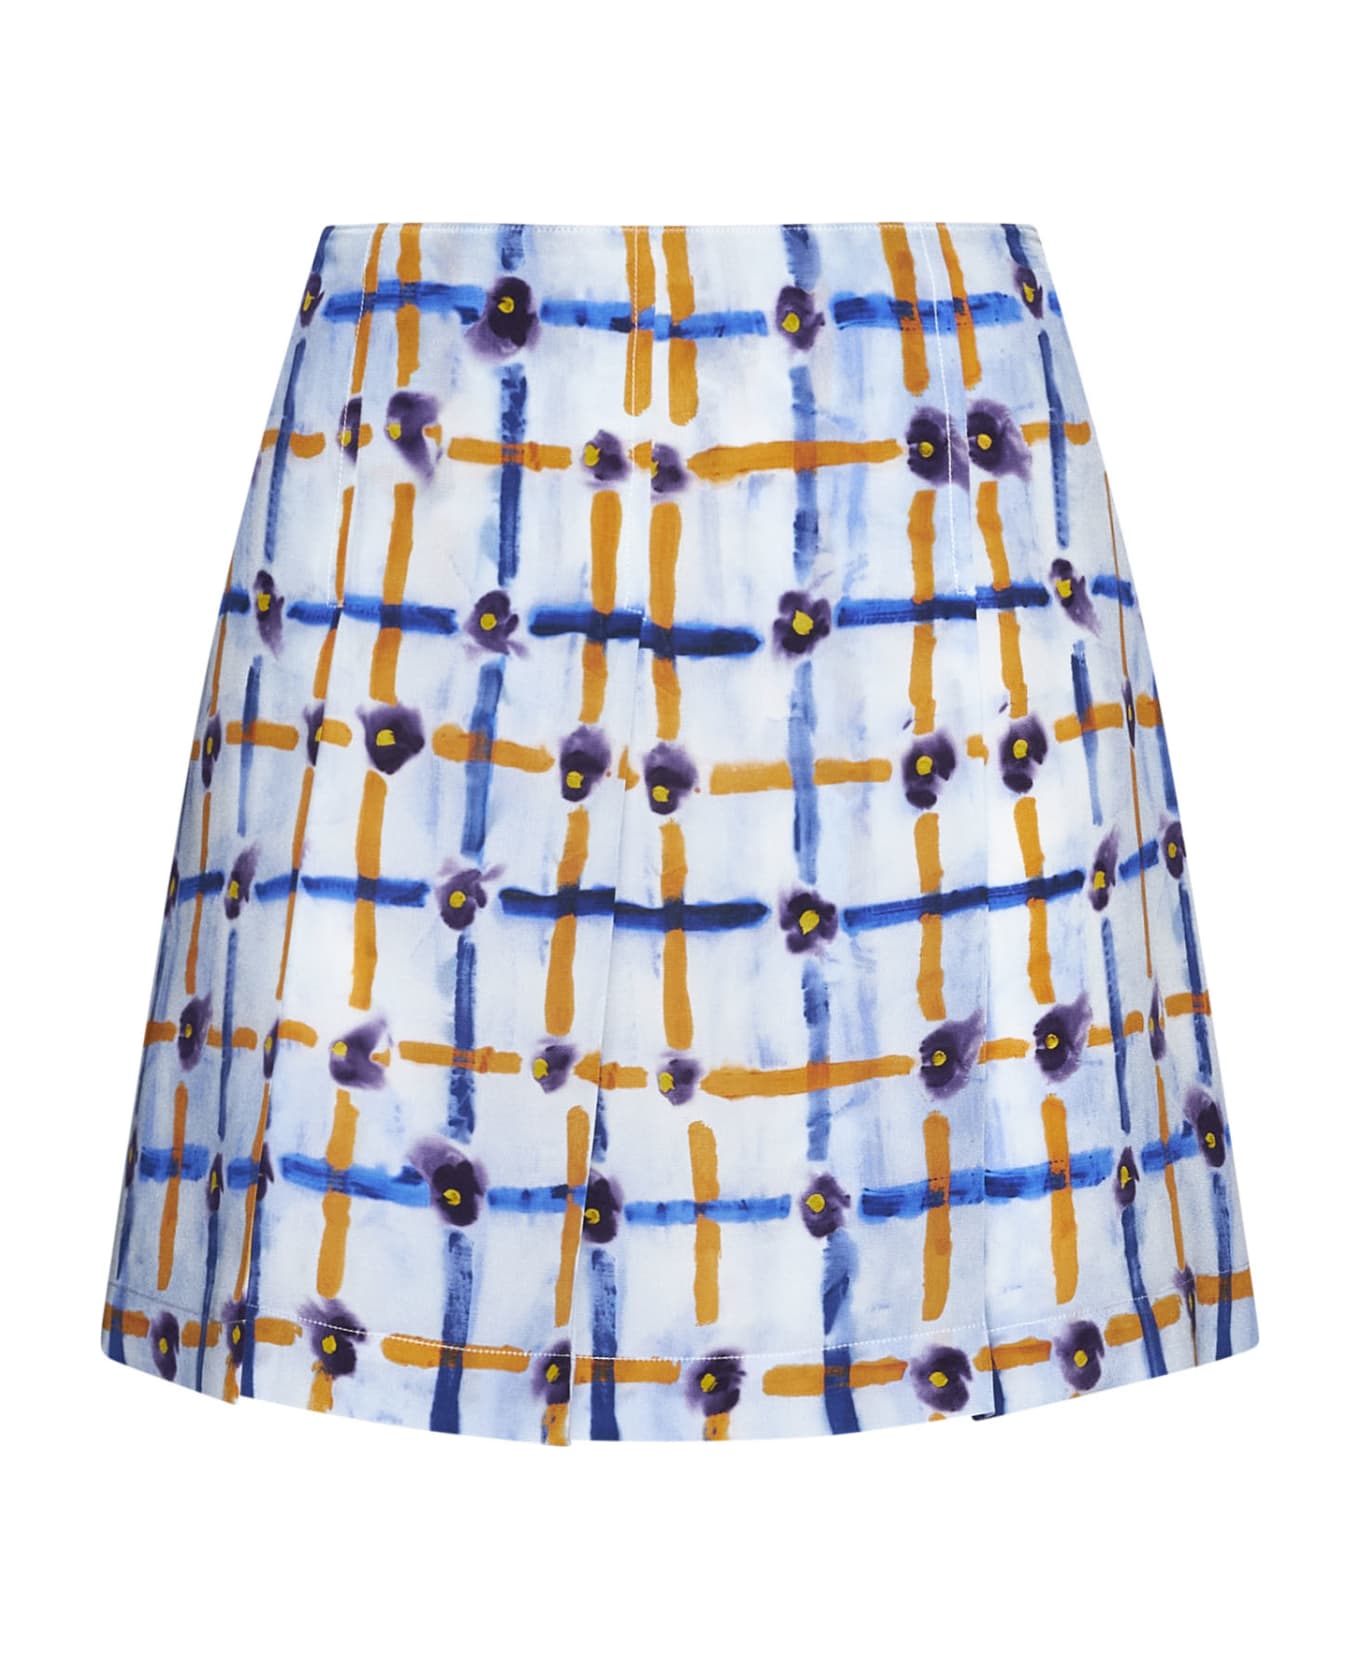 Marni Skirt - Light blue